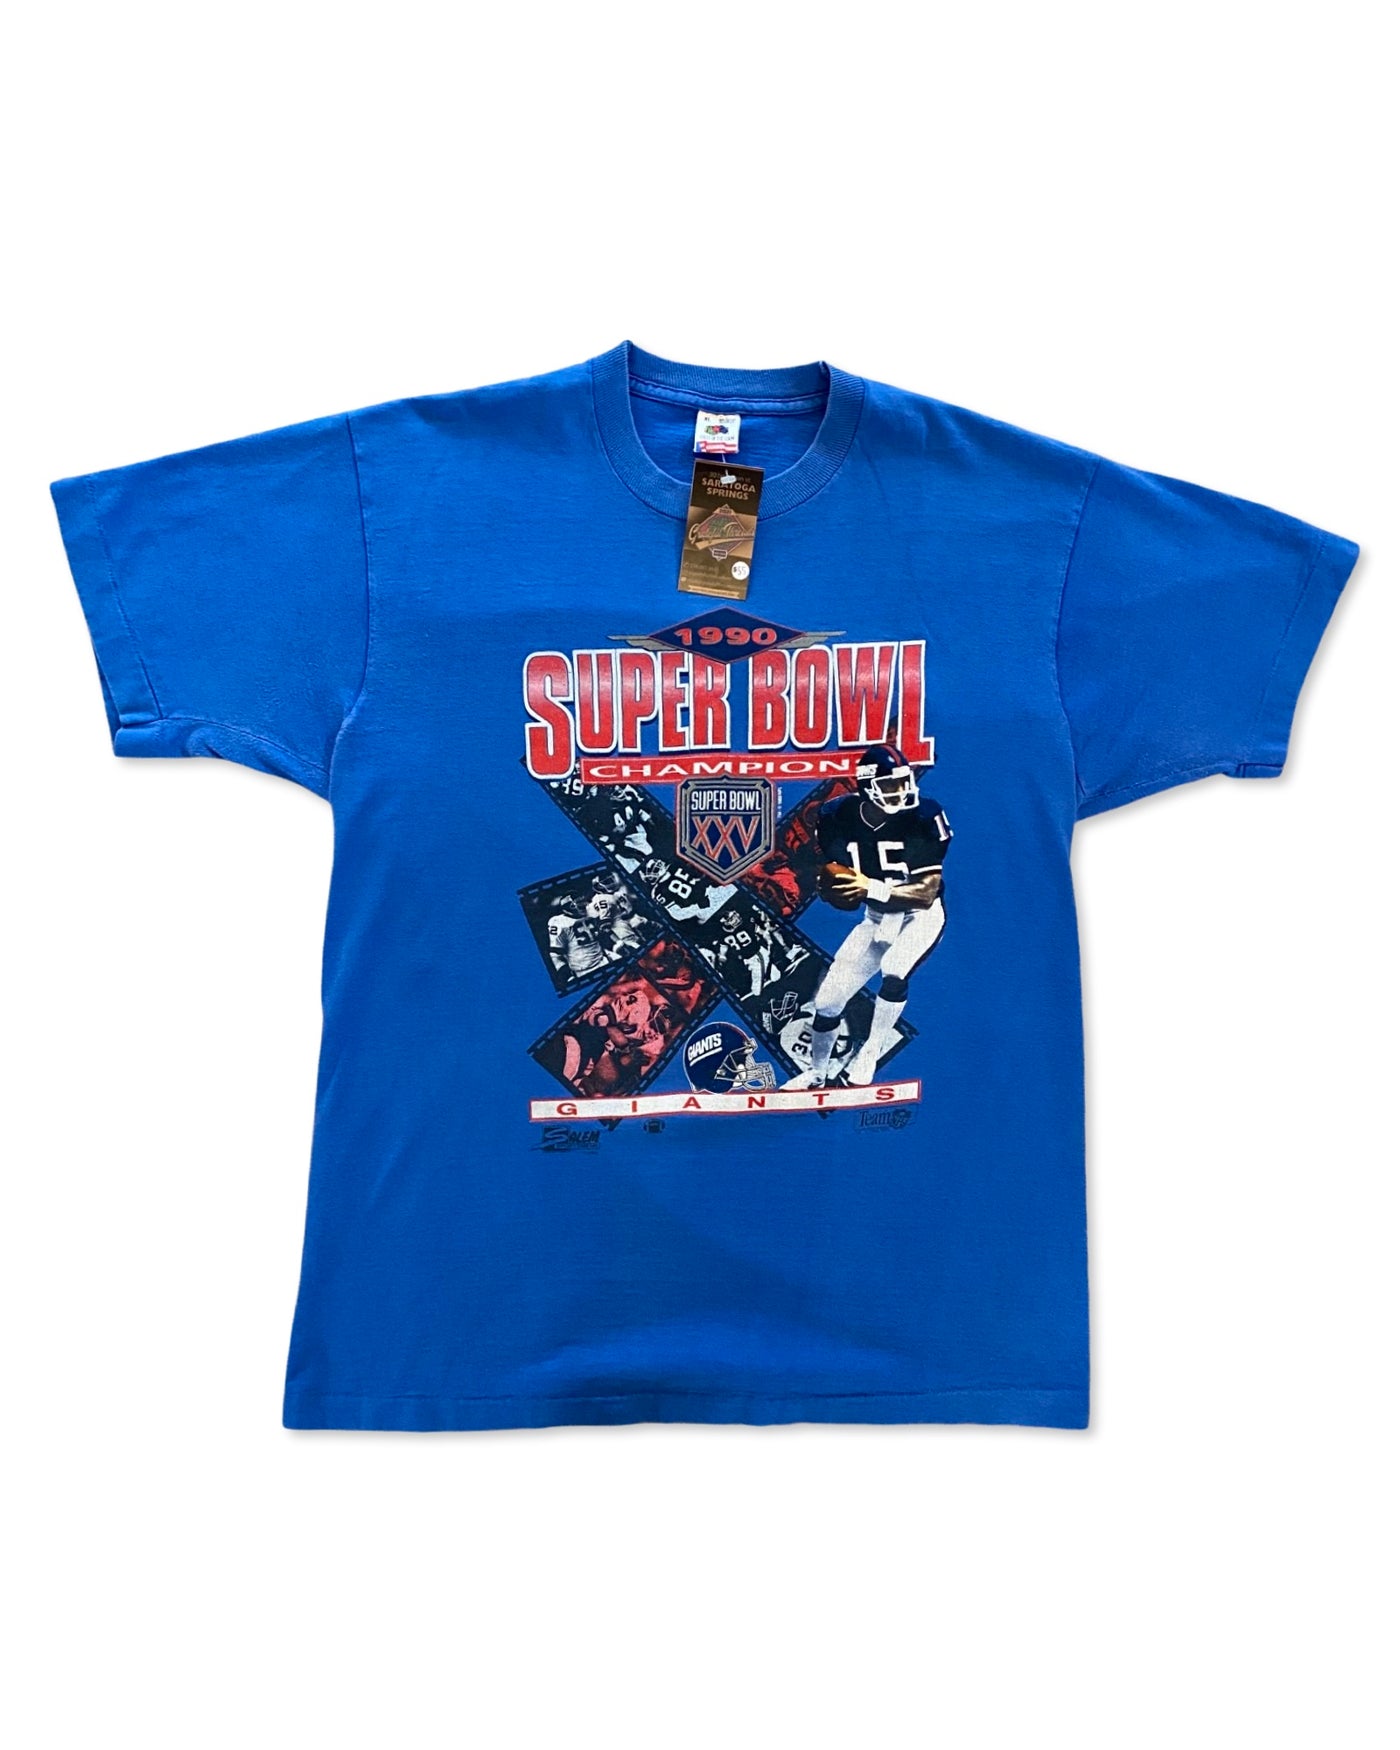 Vintage 1990 New York Giants Super Bowl Champions T-Shirt